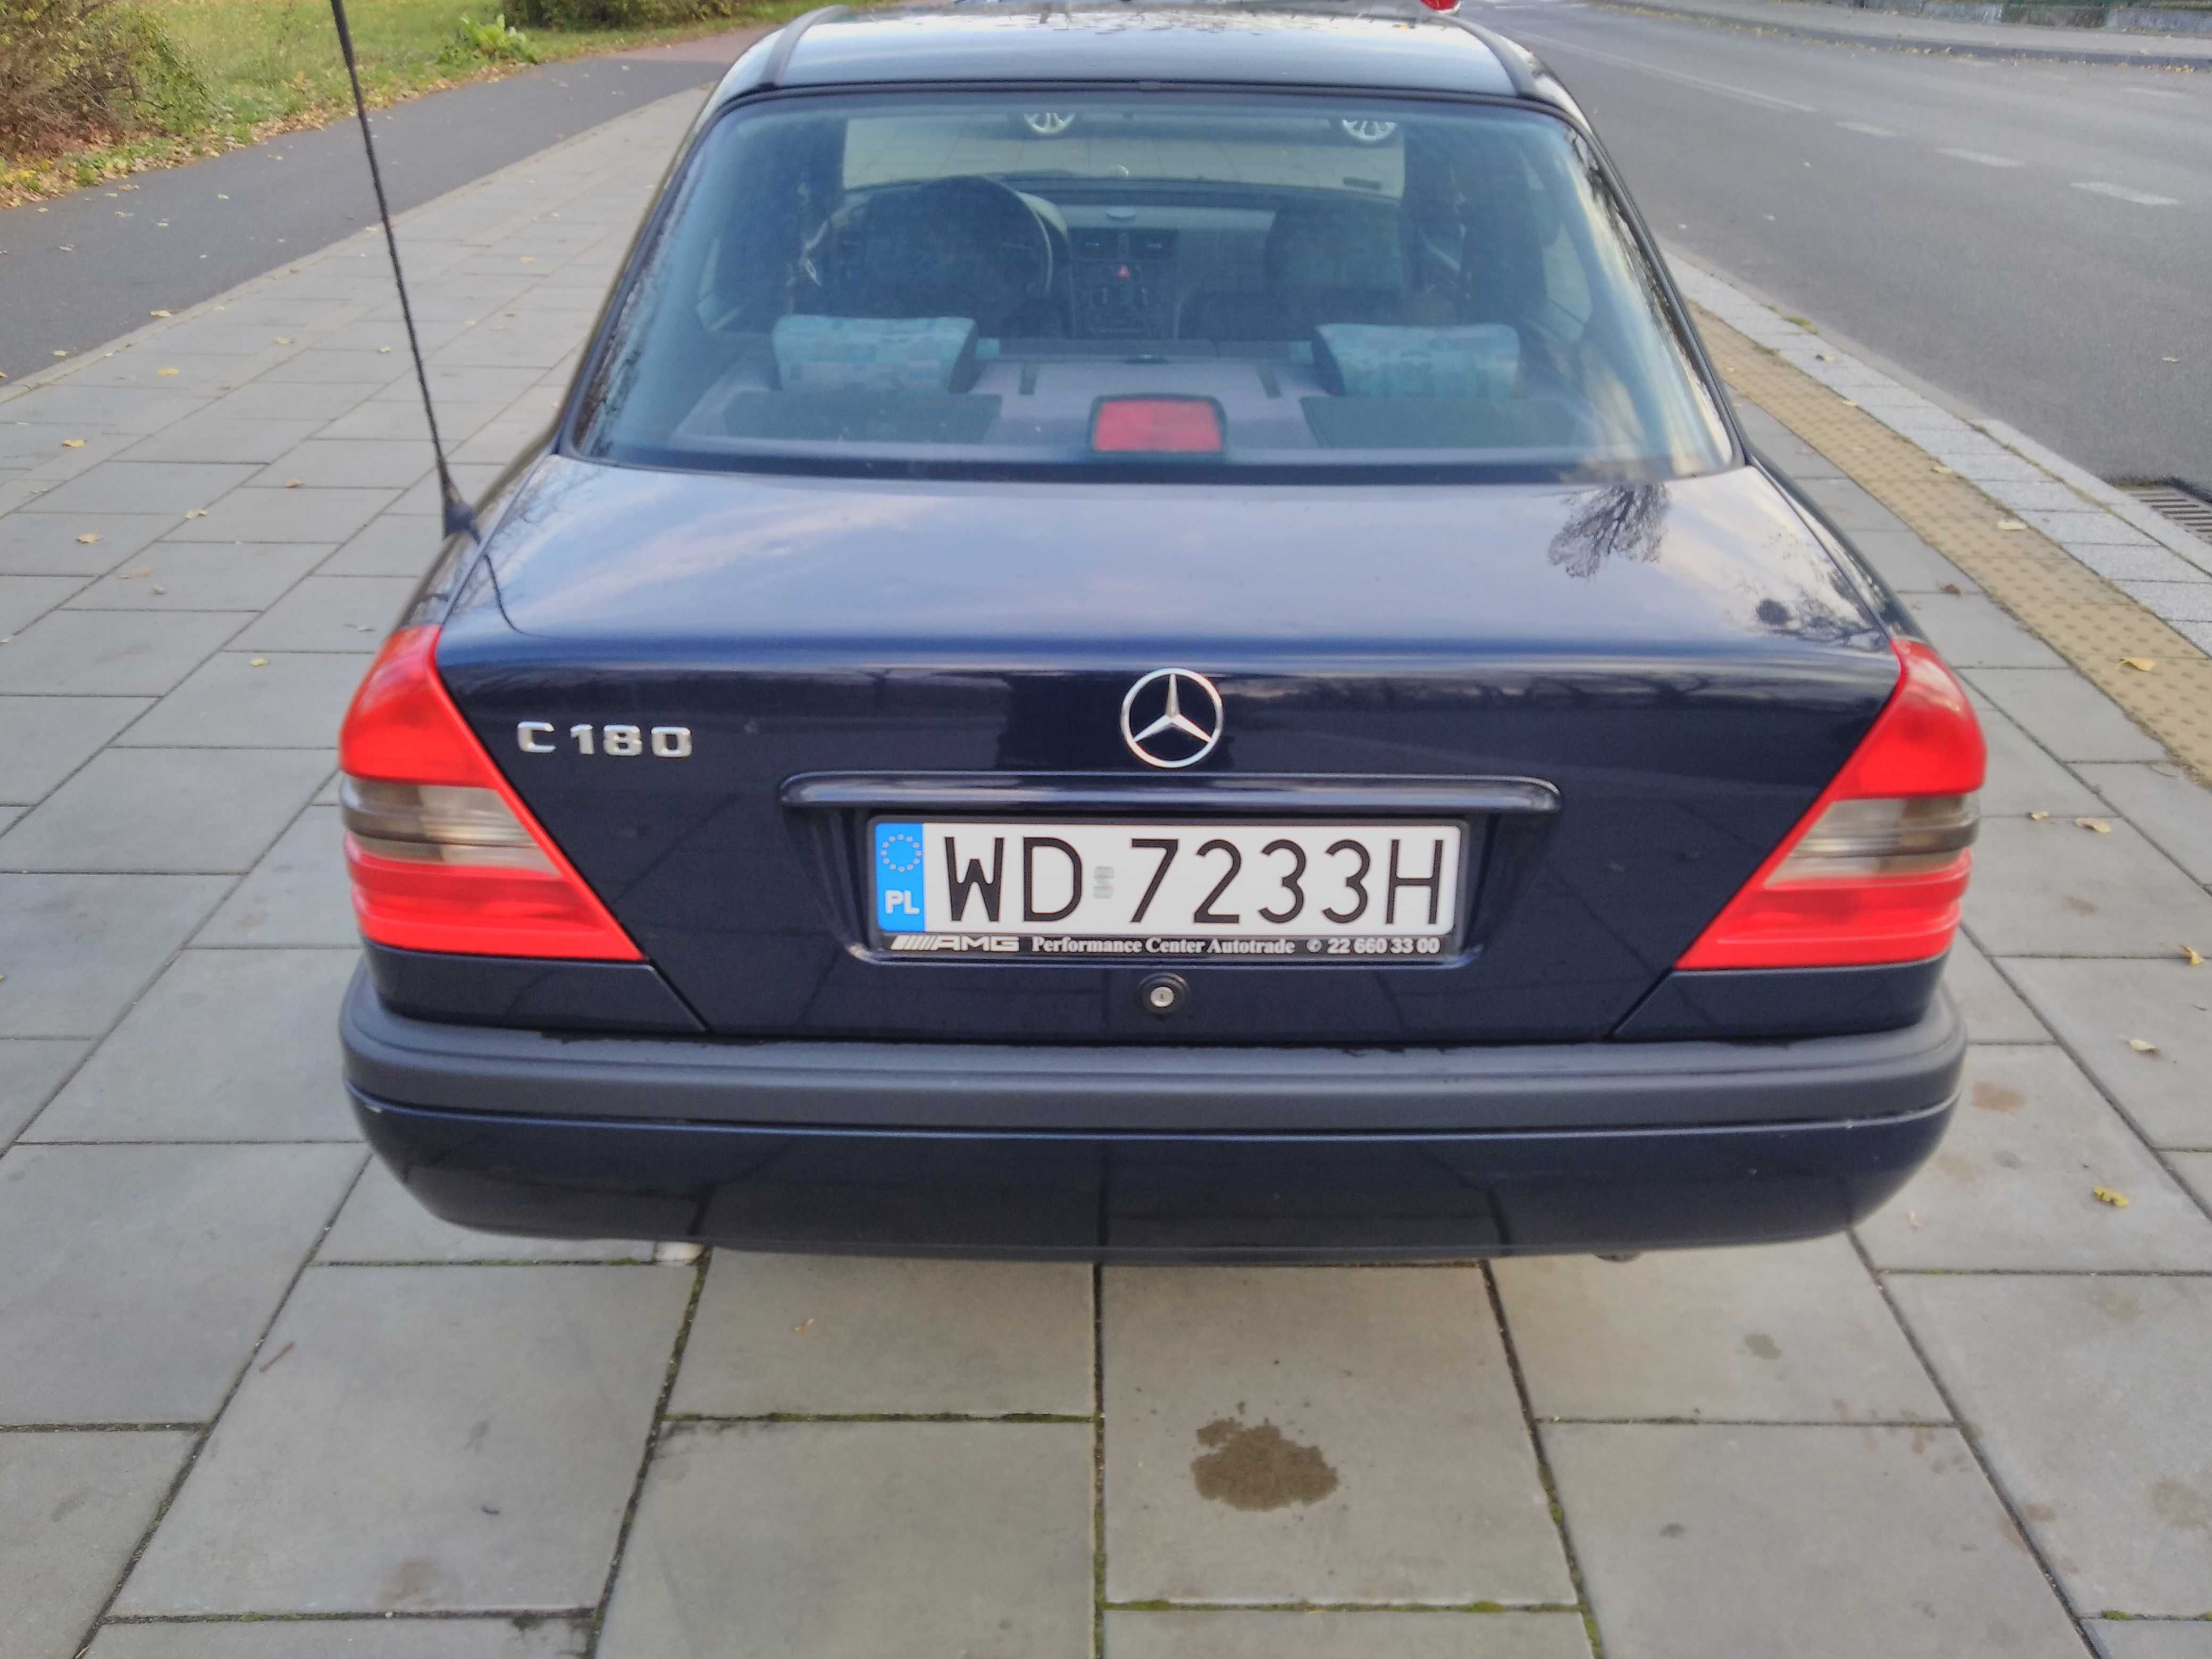 Mercedes W202 c180